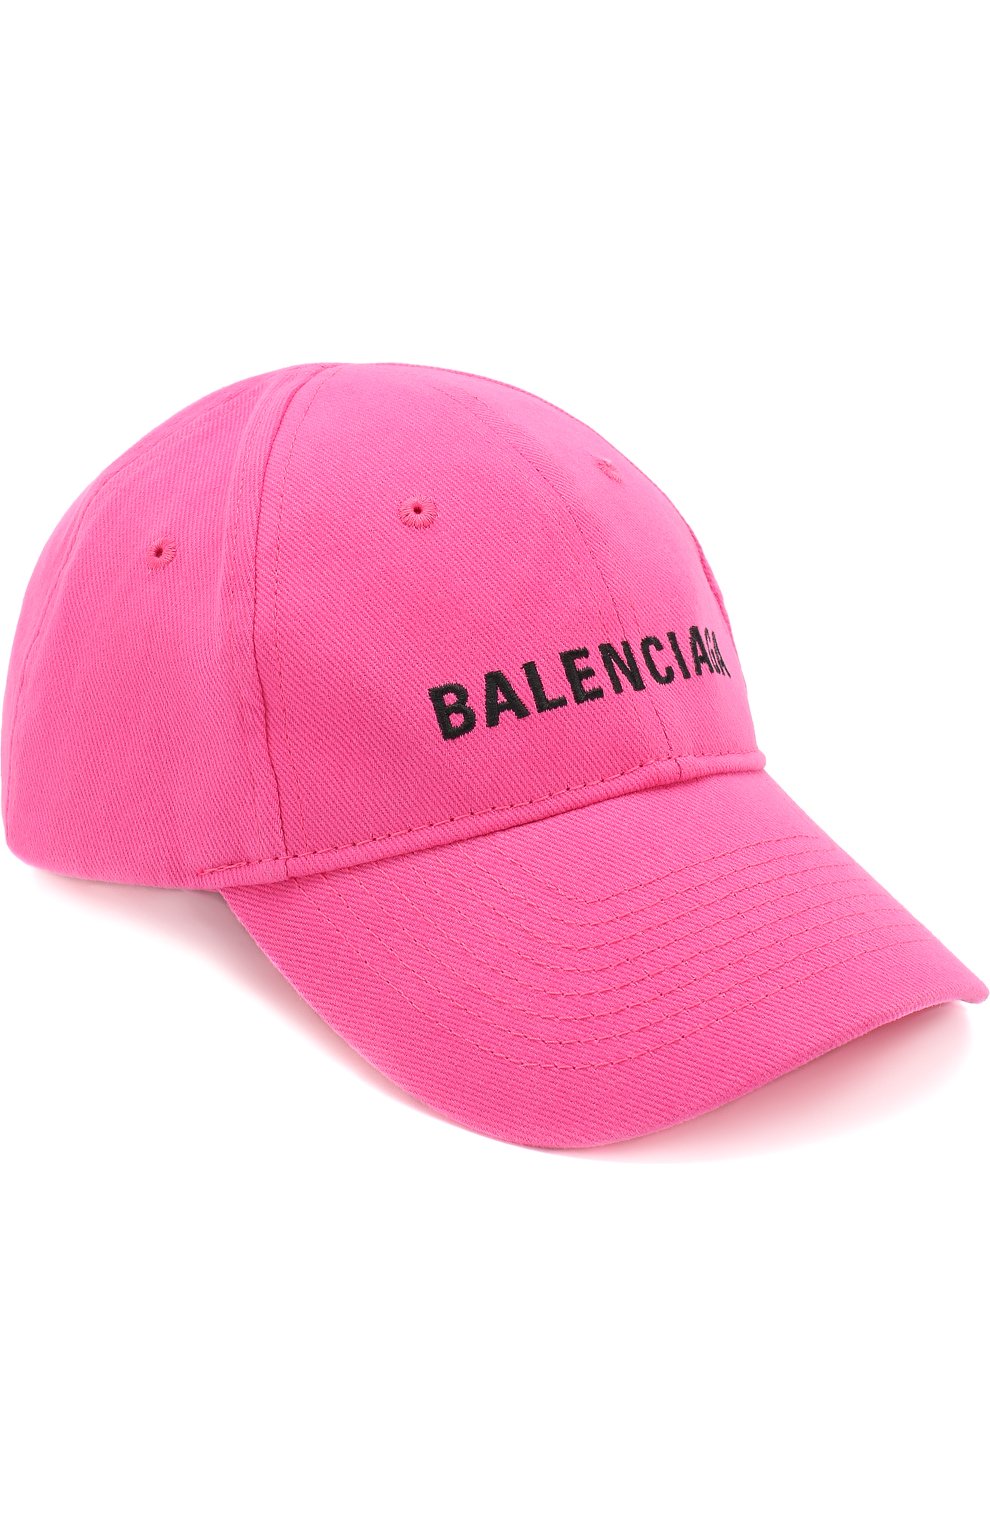 Цум кепка. Кепка Баленсиага розовая. Бейсболка Баленсиага женская. Balenciaga бейсболка женская. Кепки бренда Balenciaga.